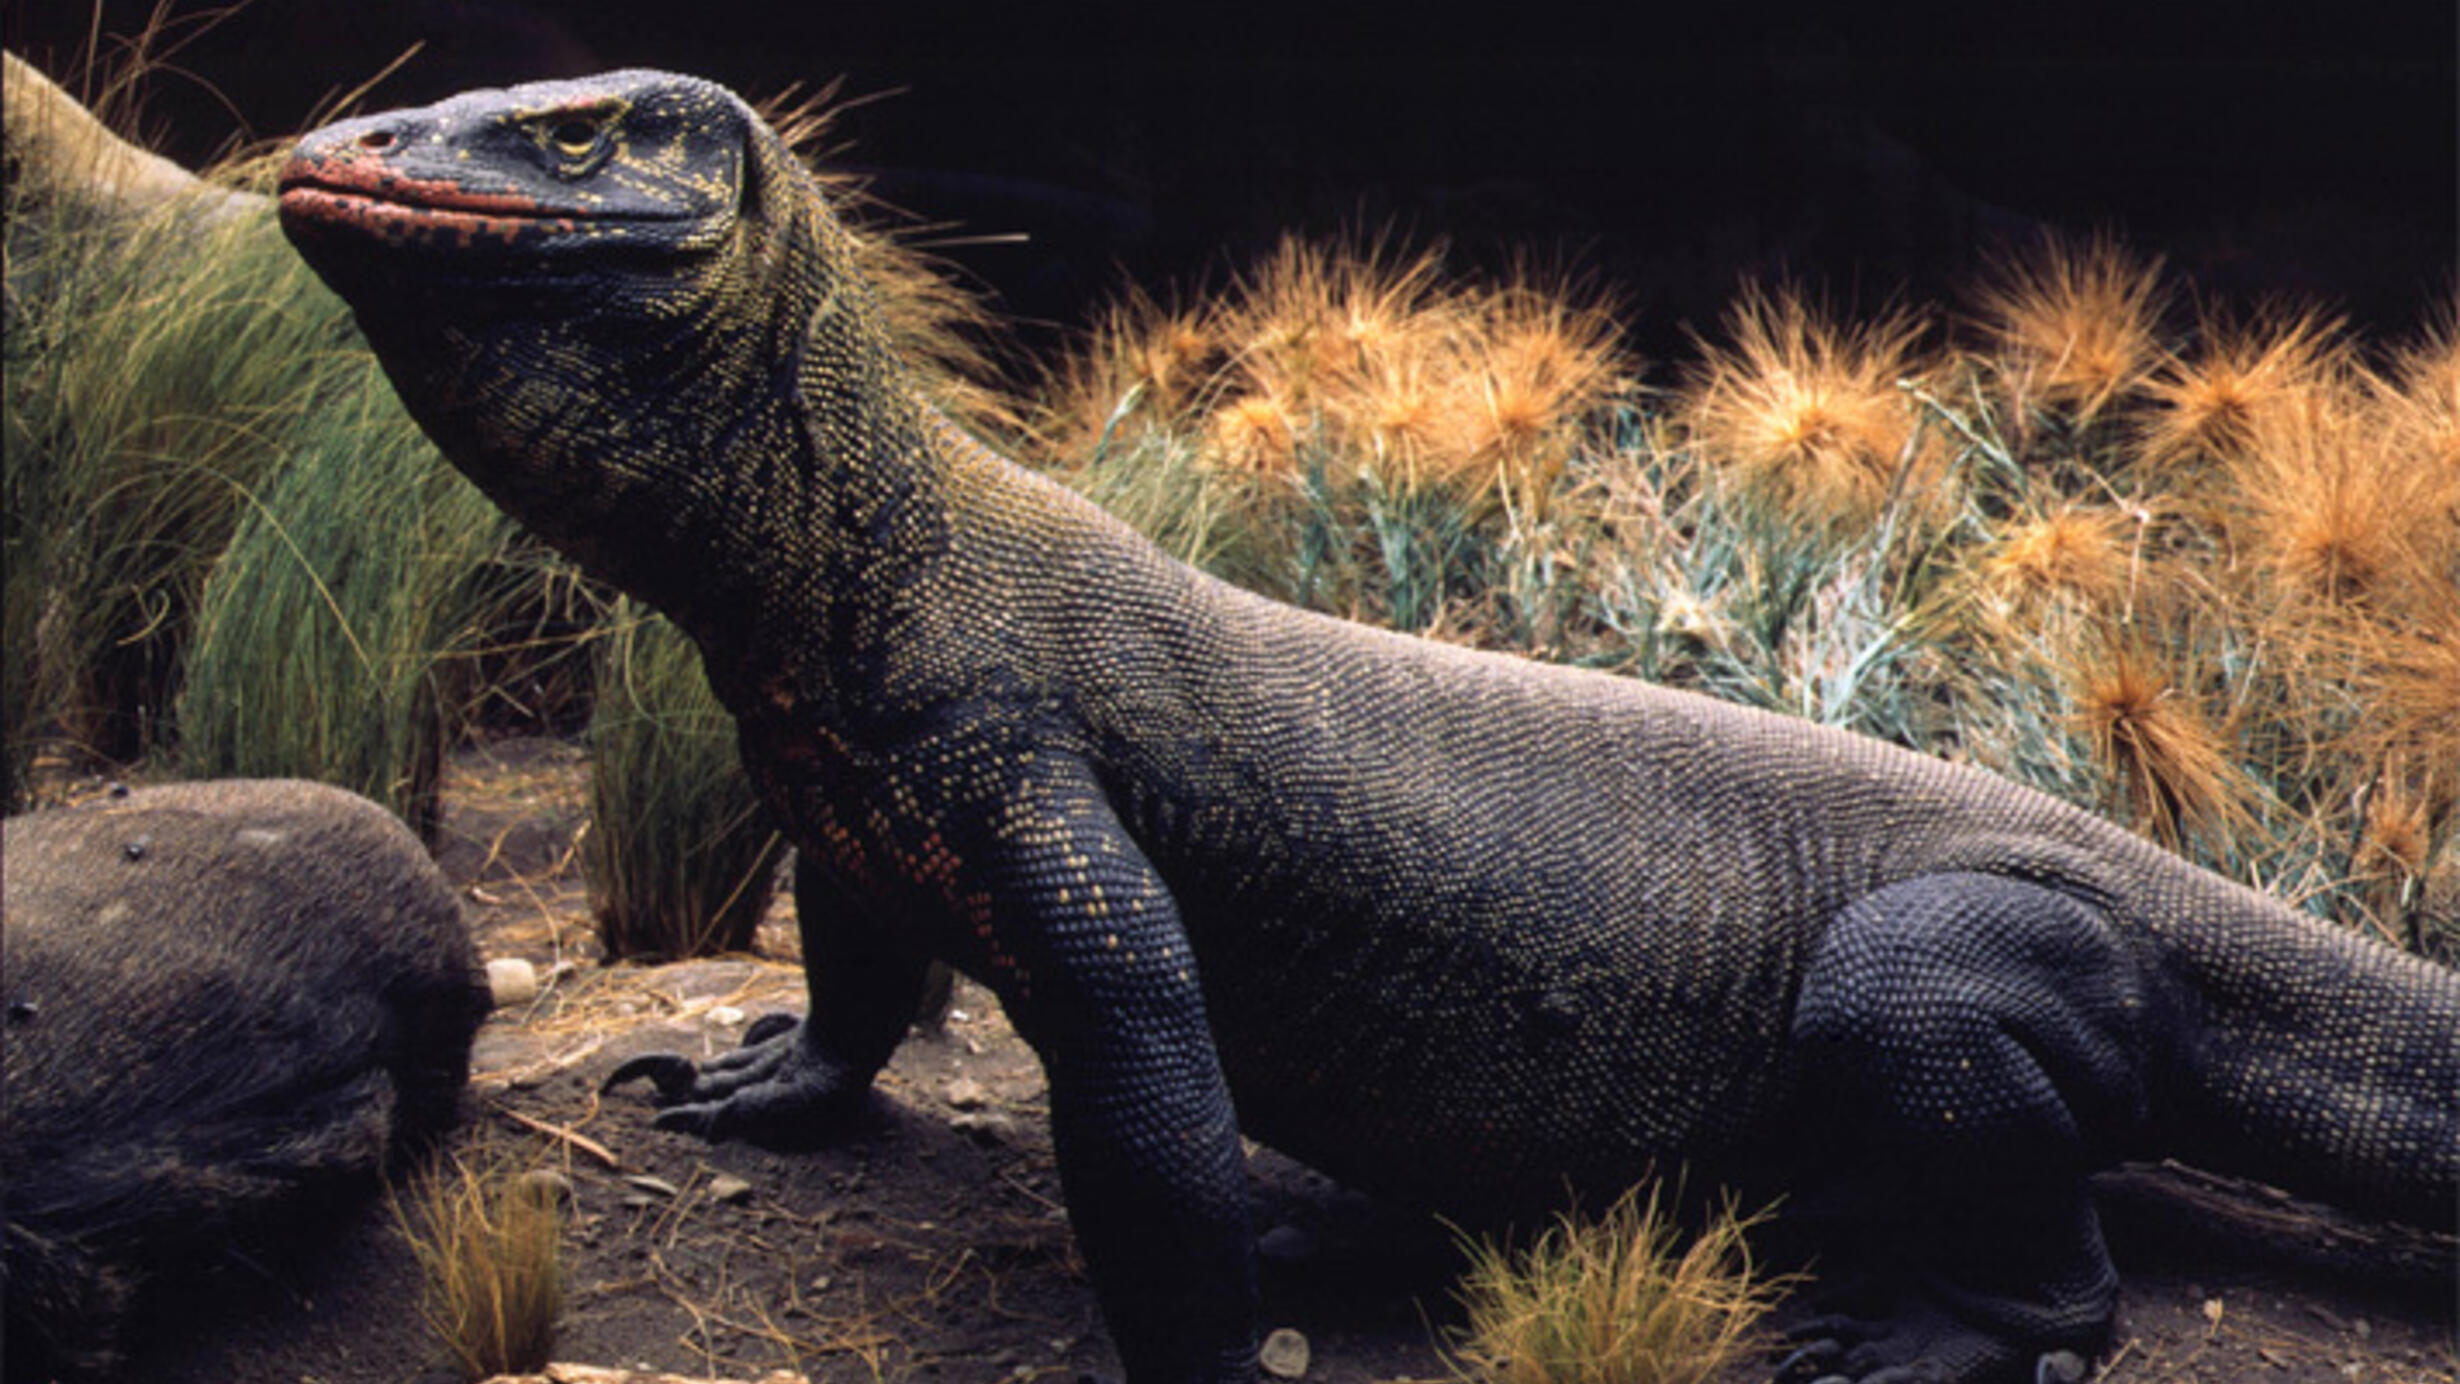 Model of Komodo dragon, a large reptile